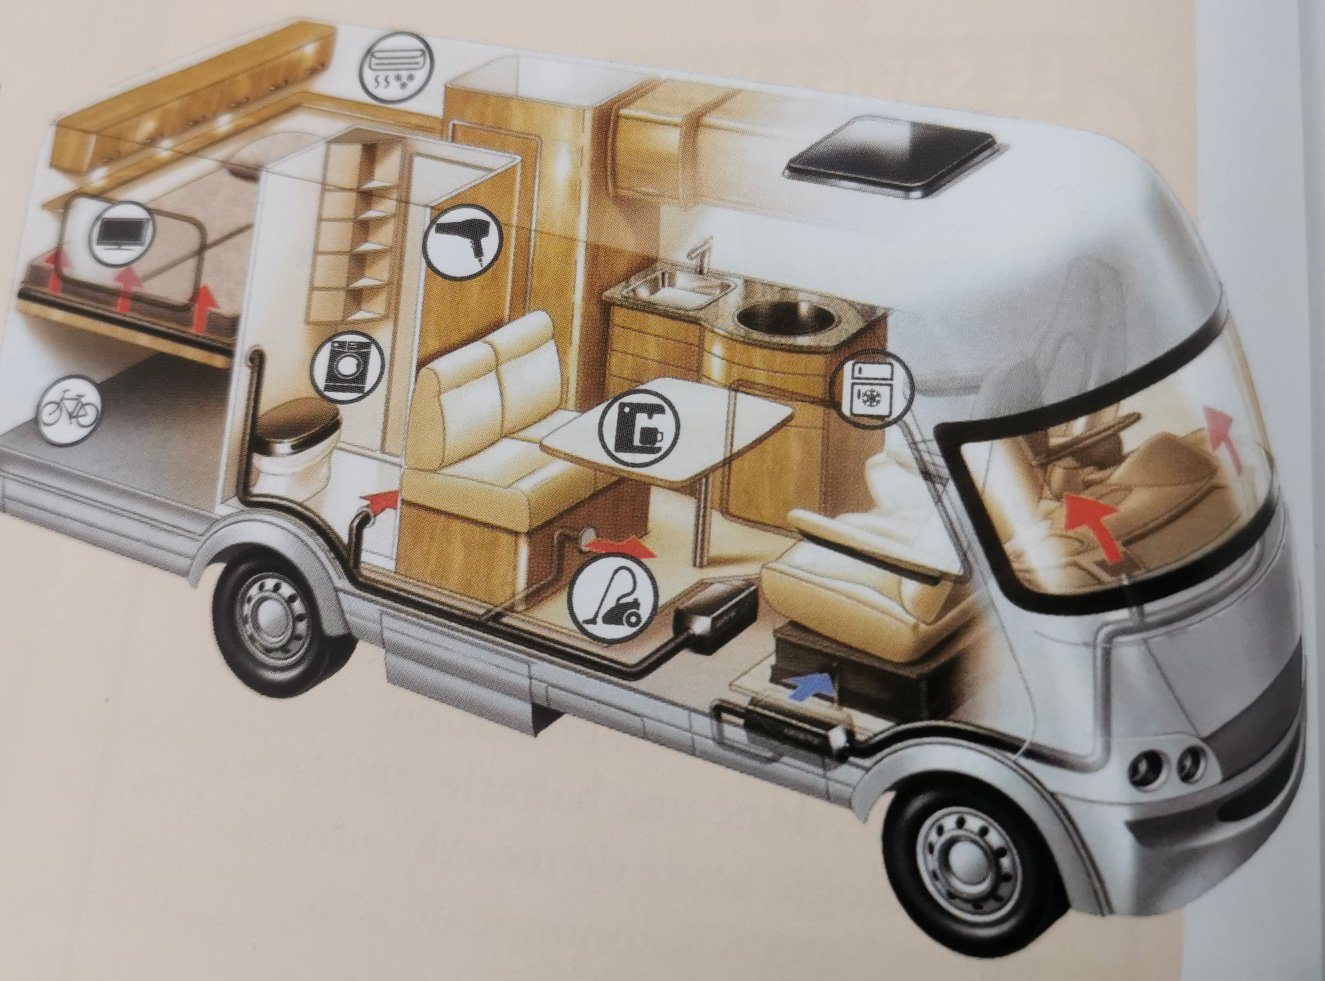 puissance-énergétique-camping-car-équipements